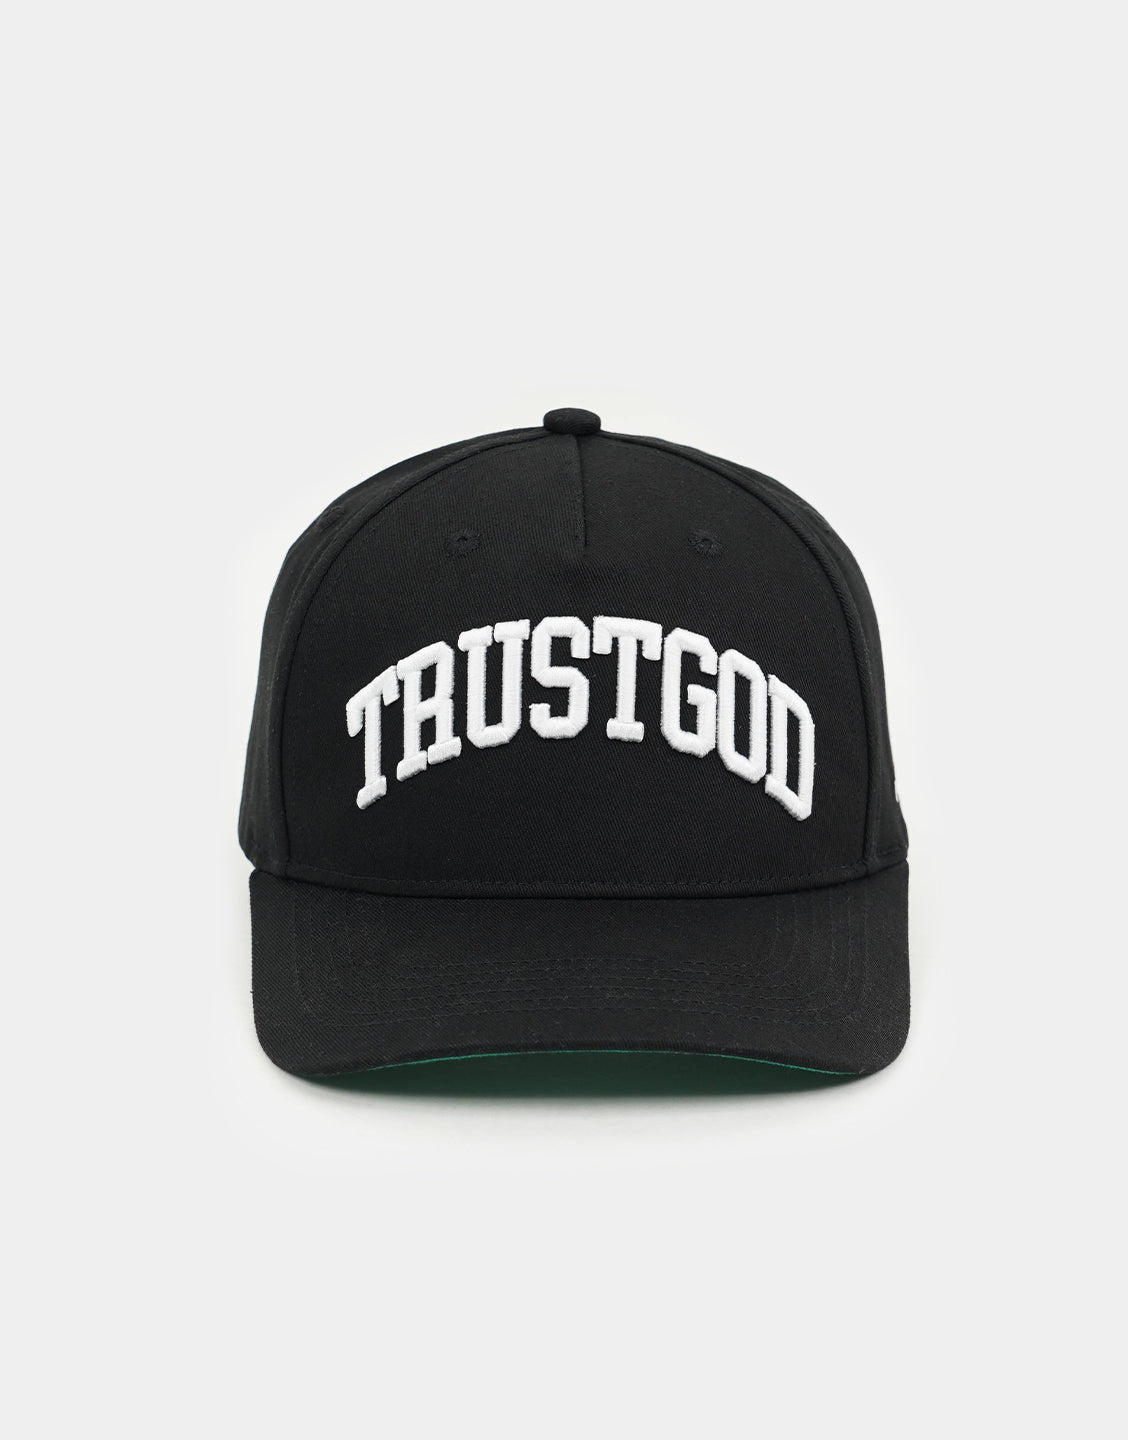 Trust God Premium Baseball Hat - Black